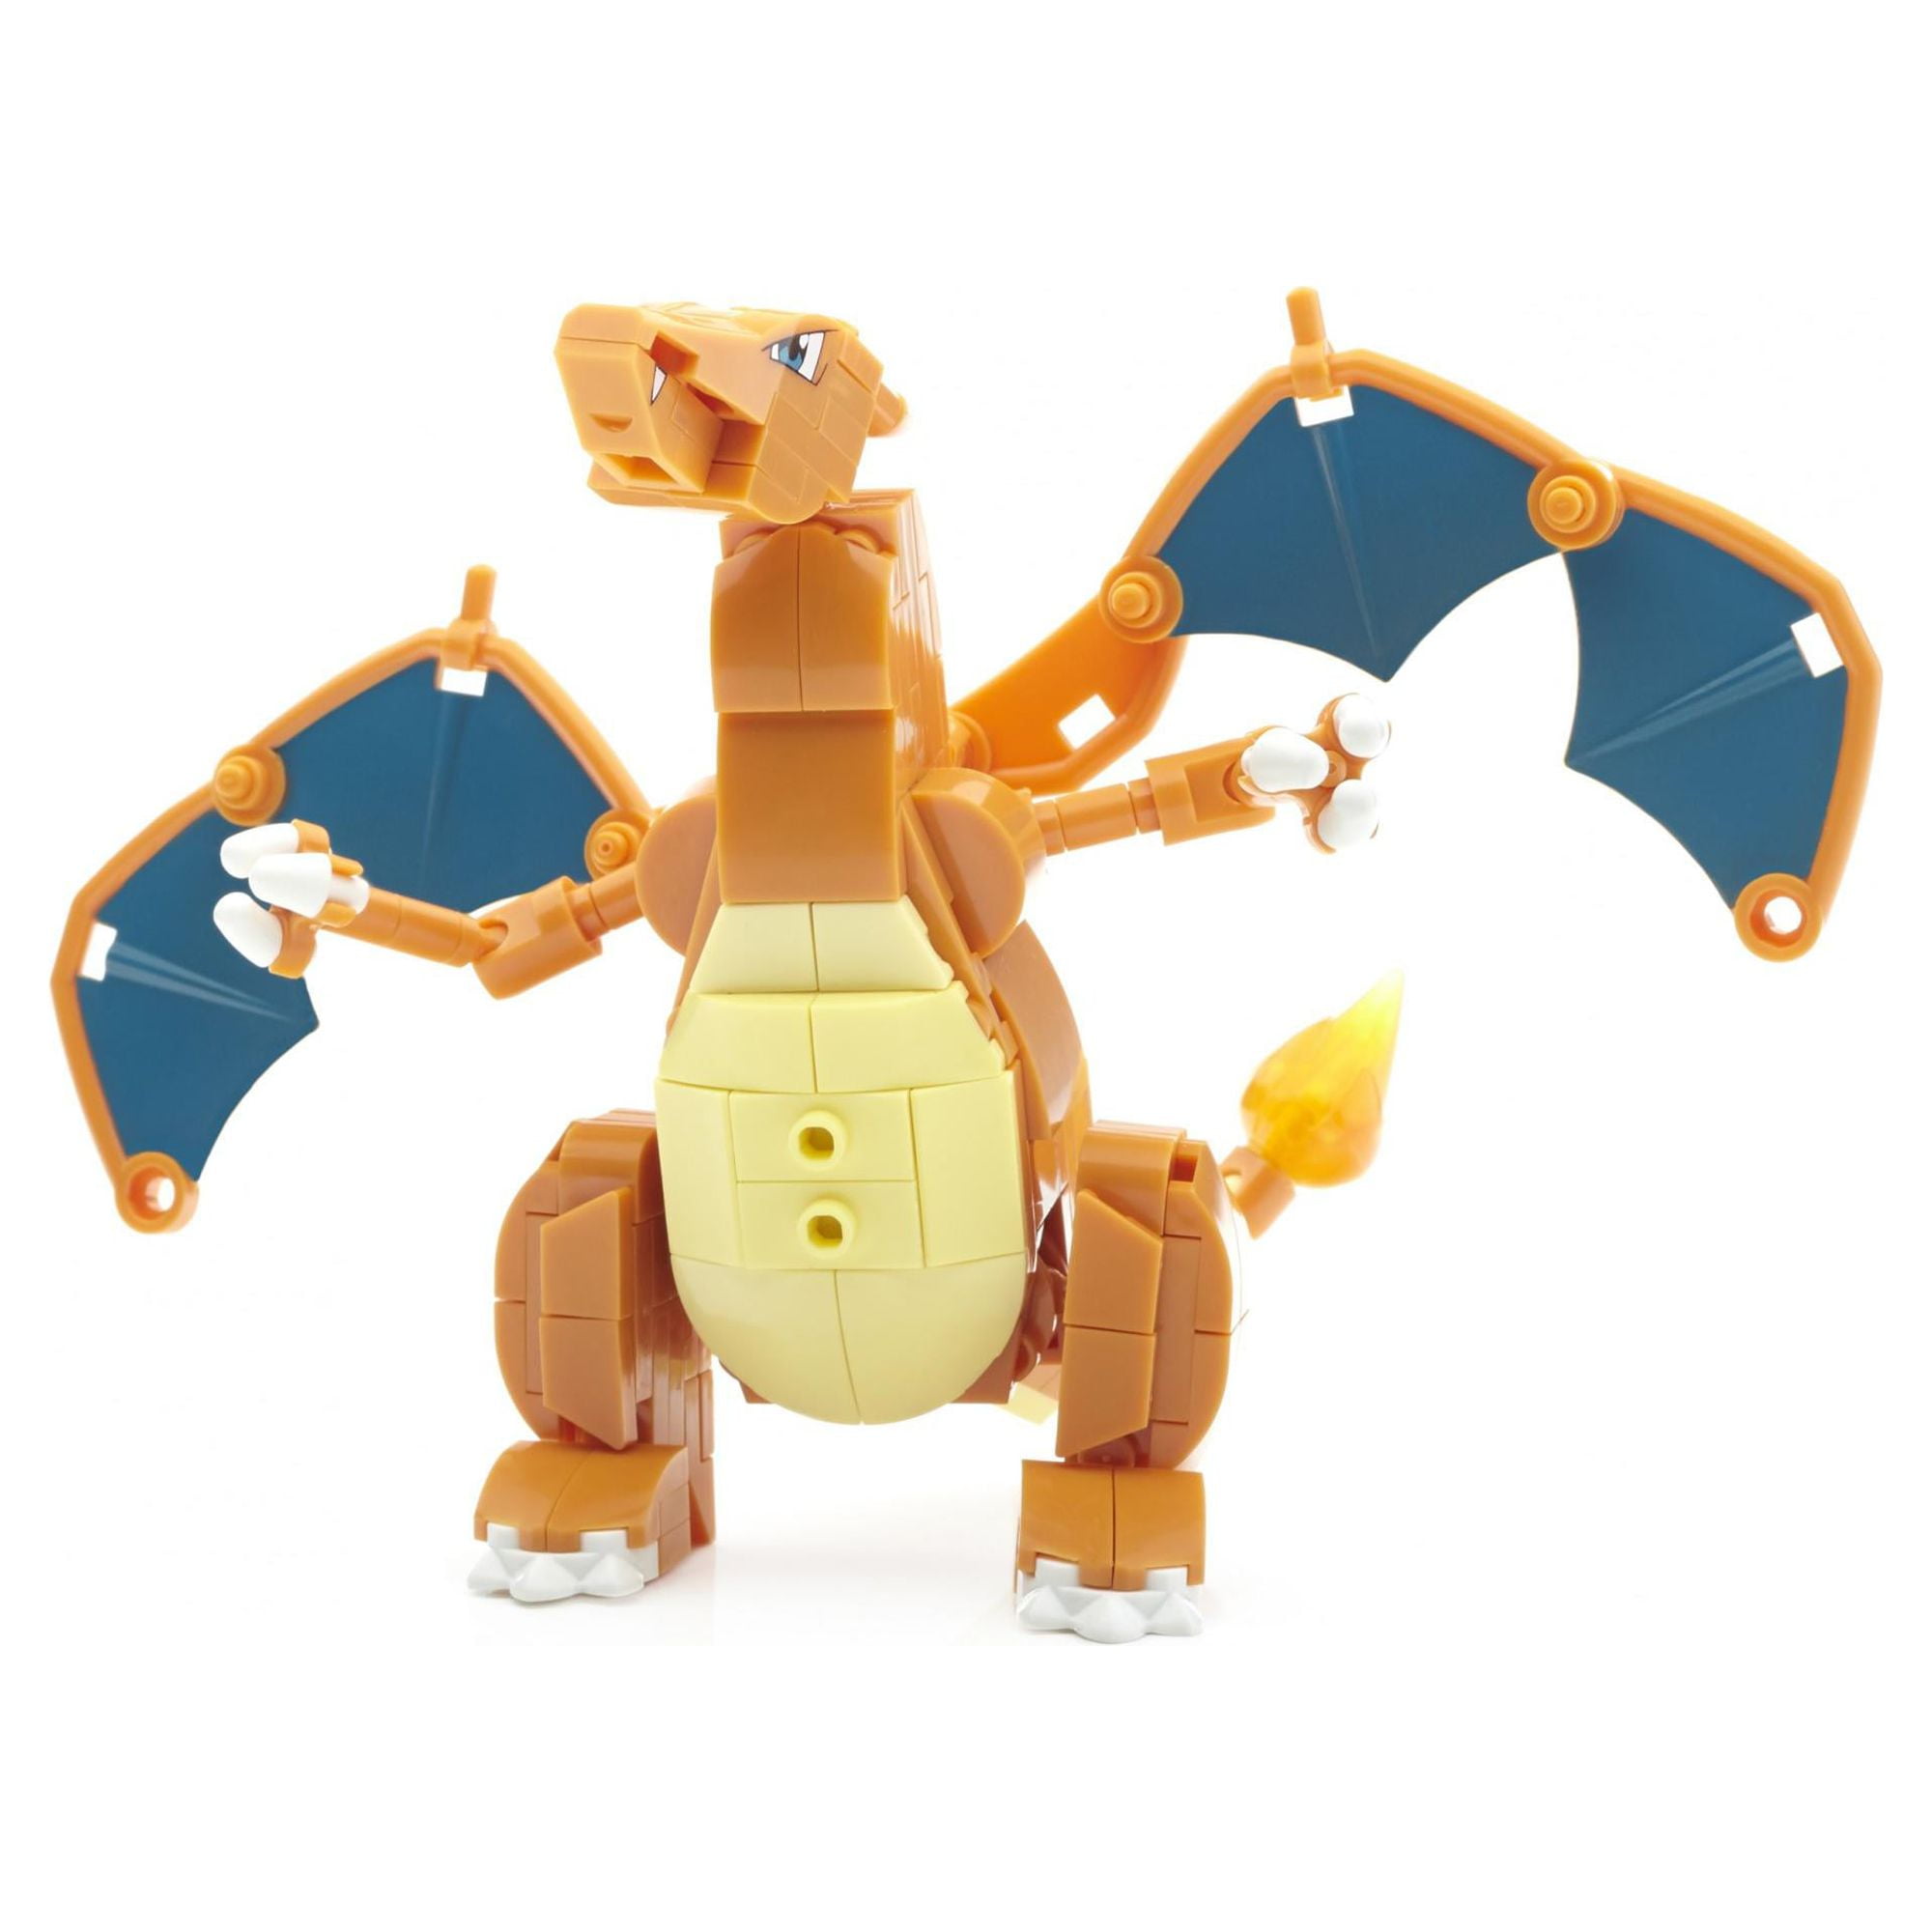 MEGA Pokémon Motion Charizard Building Set – Mattel Creations